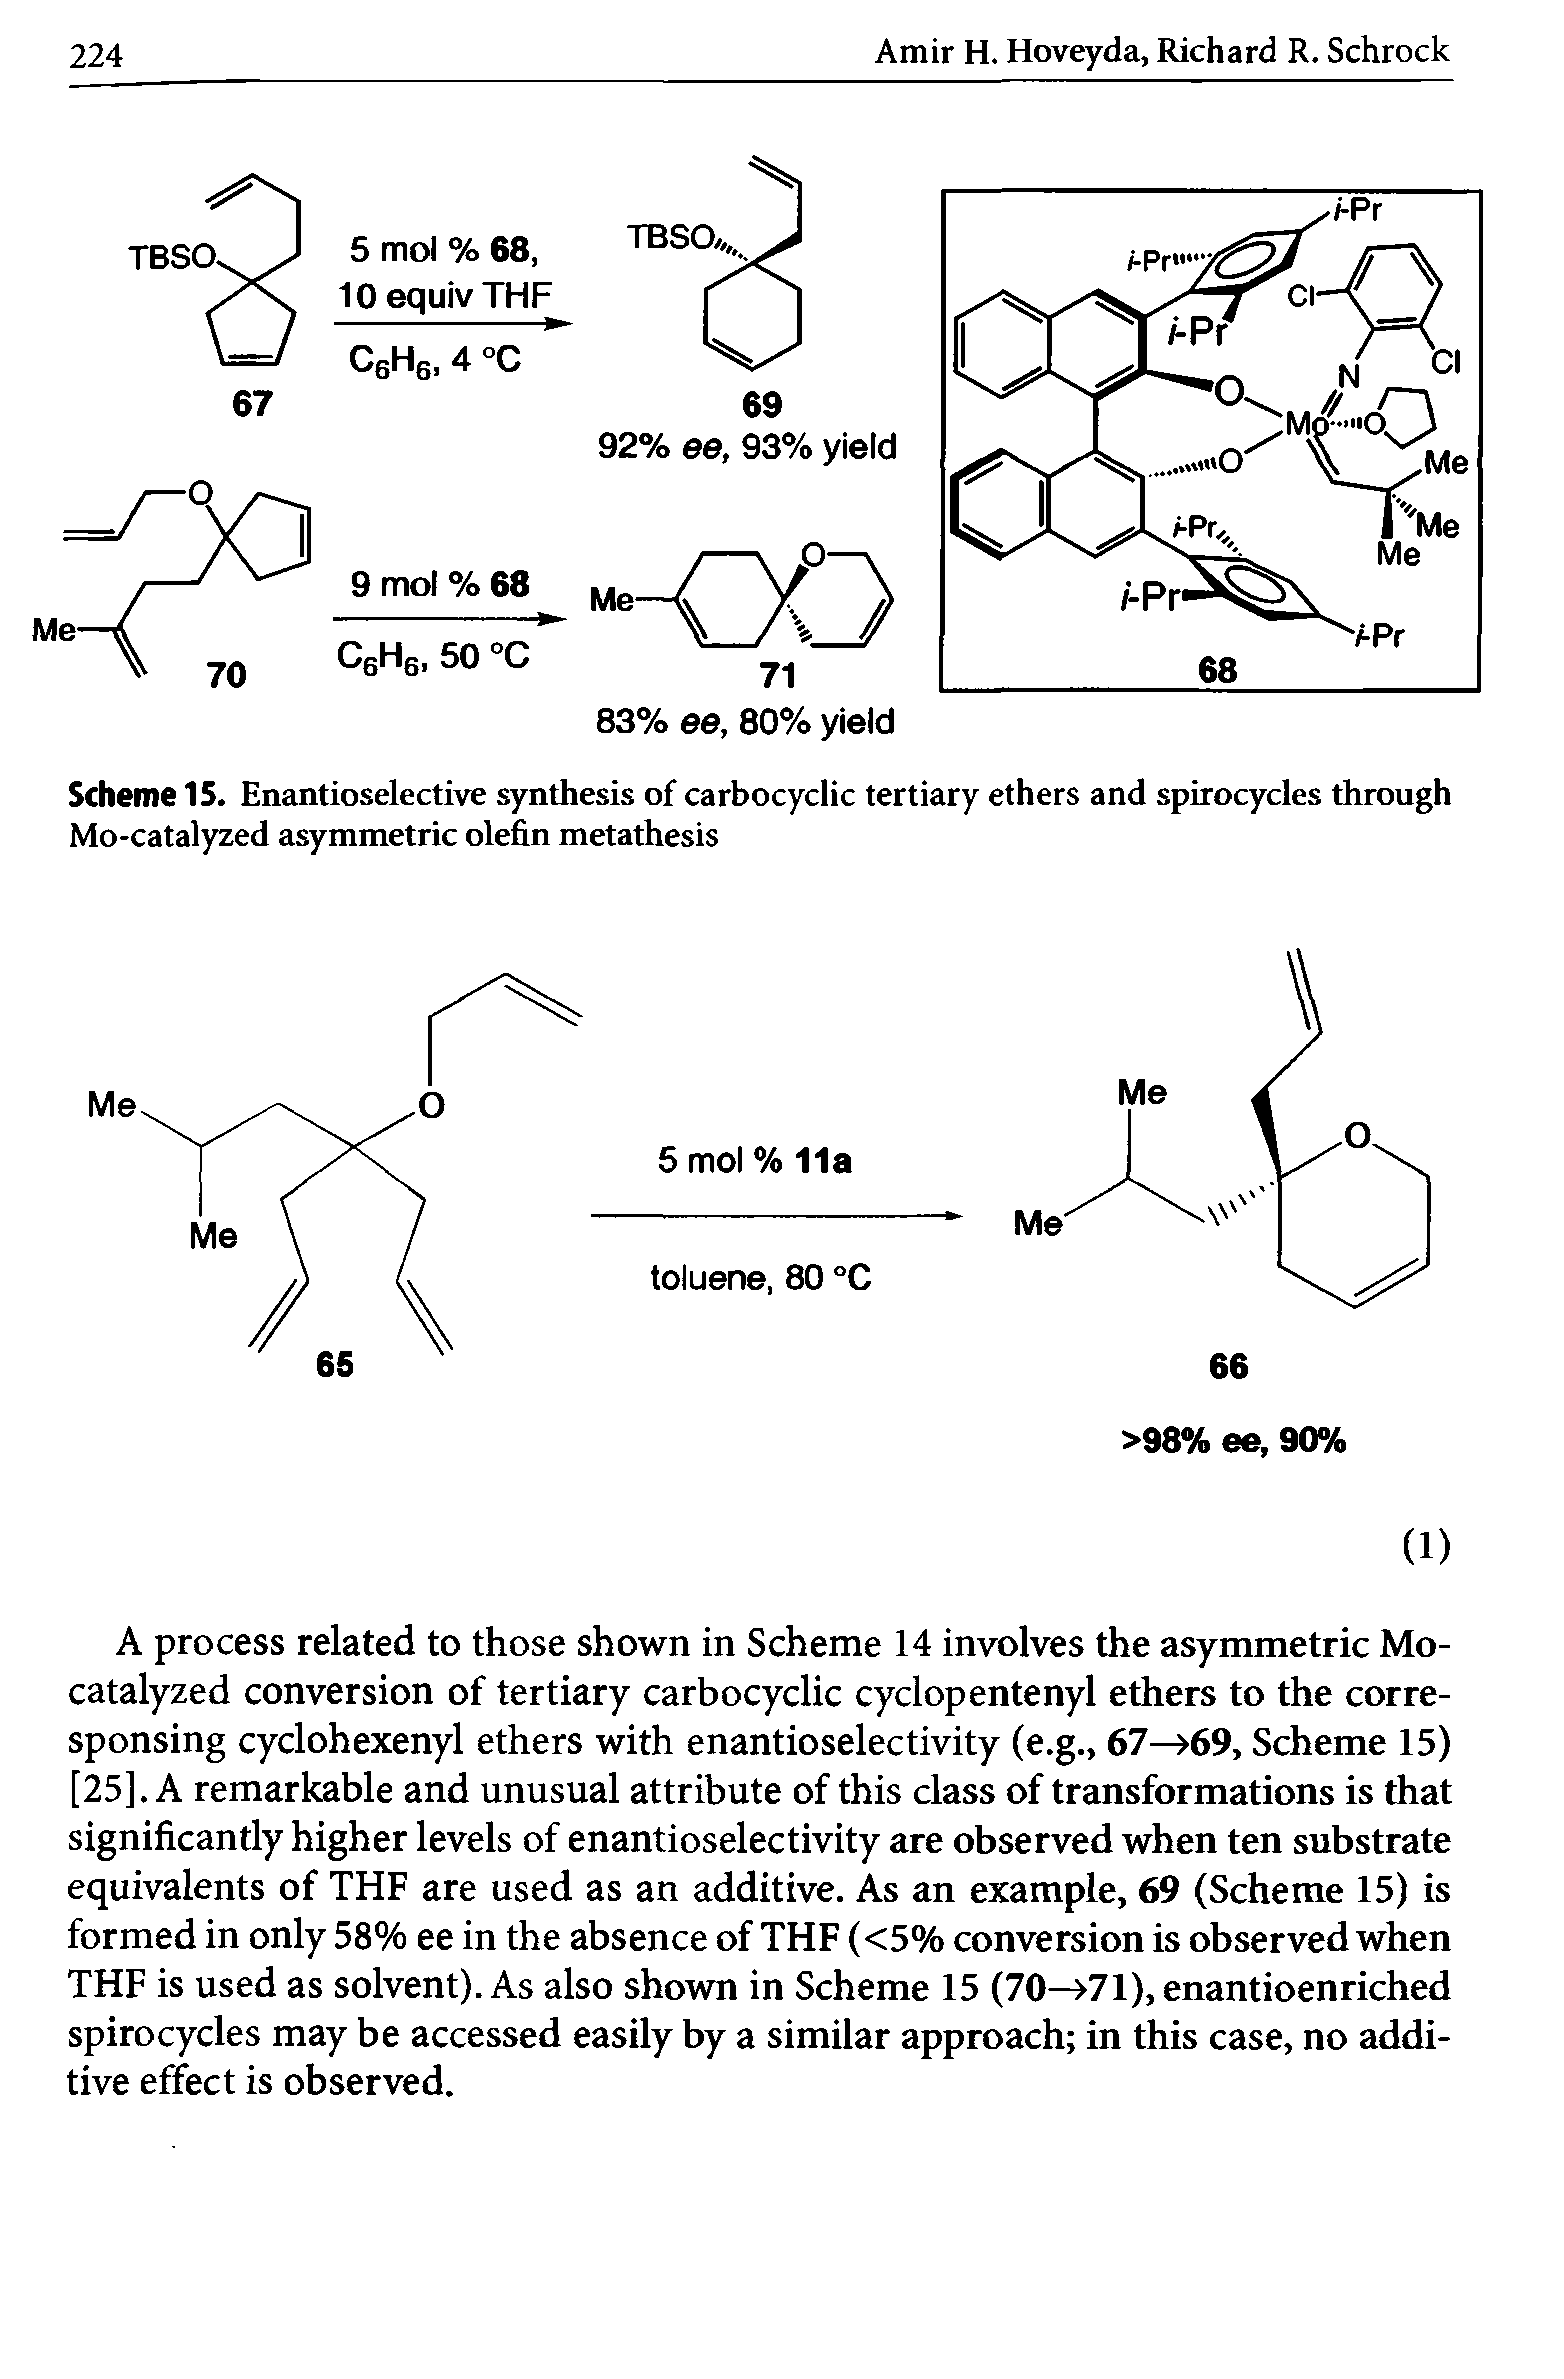 Scheme 15. Enantioselective synthesis of carbocyclic tertiary ethers and spirocycles through Mo-catalyzed asymmetric olefin metathesis...